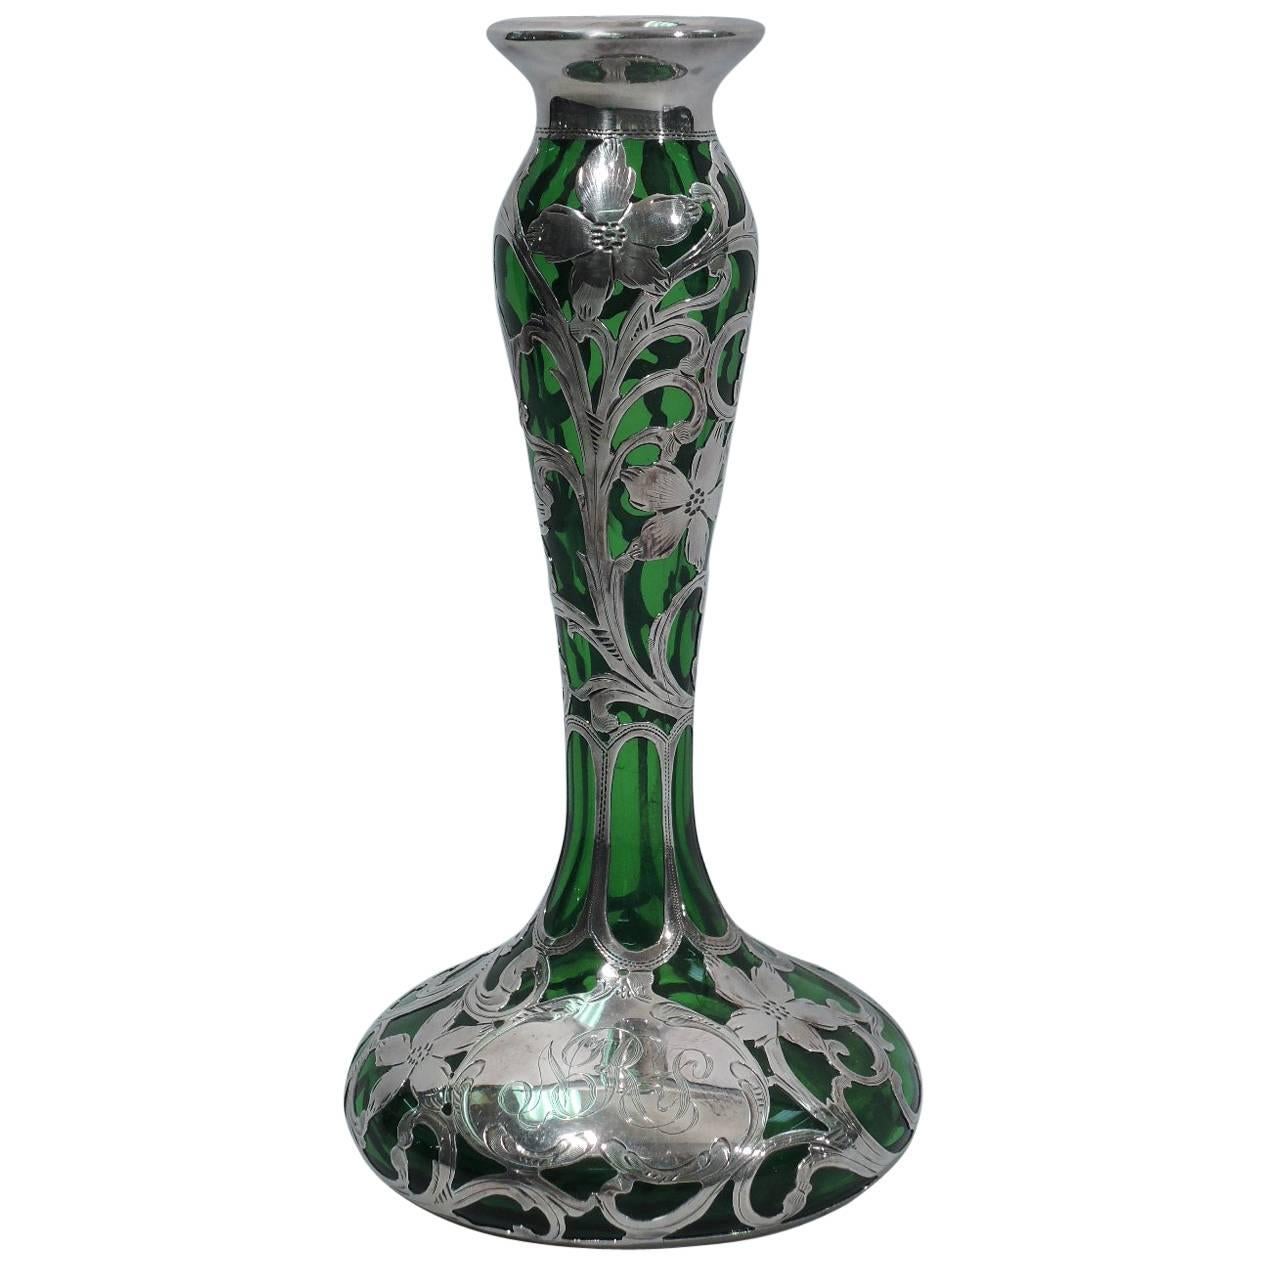 Alvin Art Nouveau Silver Overlay Emerald Glass Vase